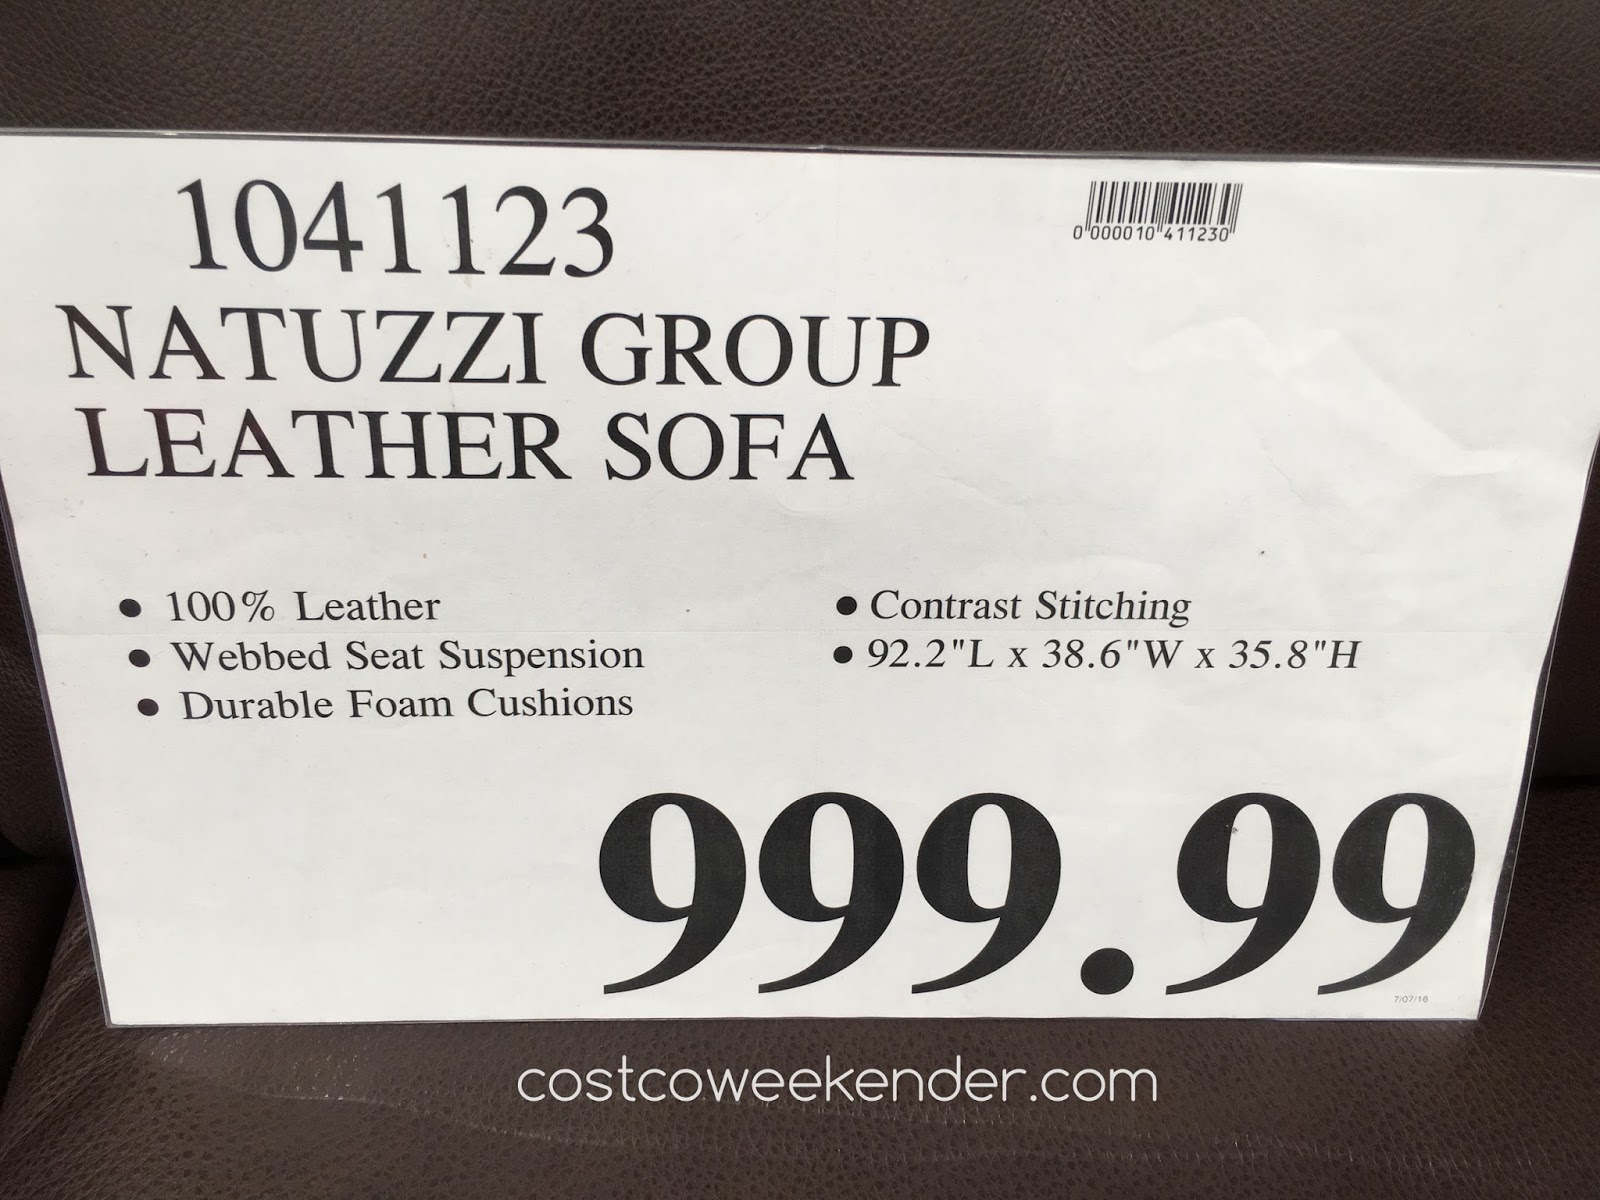 natuzzi group leather sofa 1041123